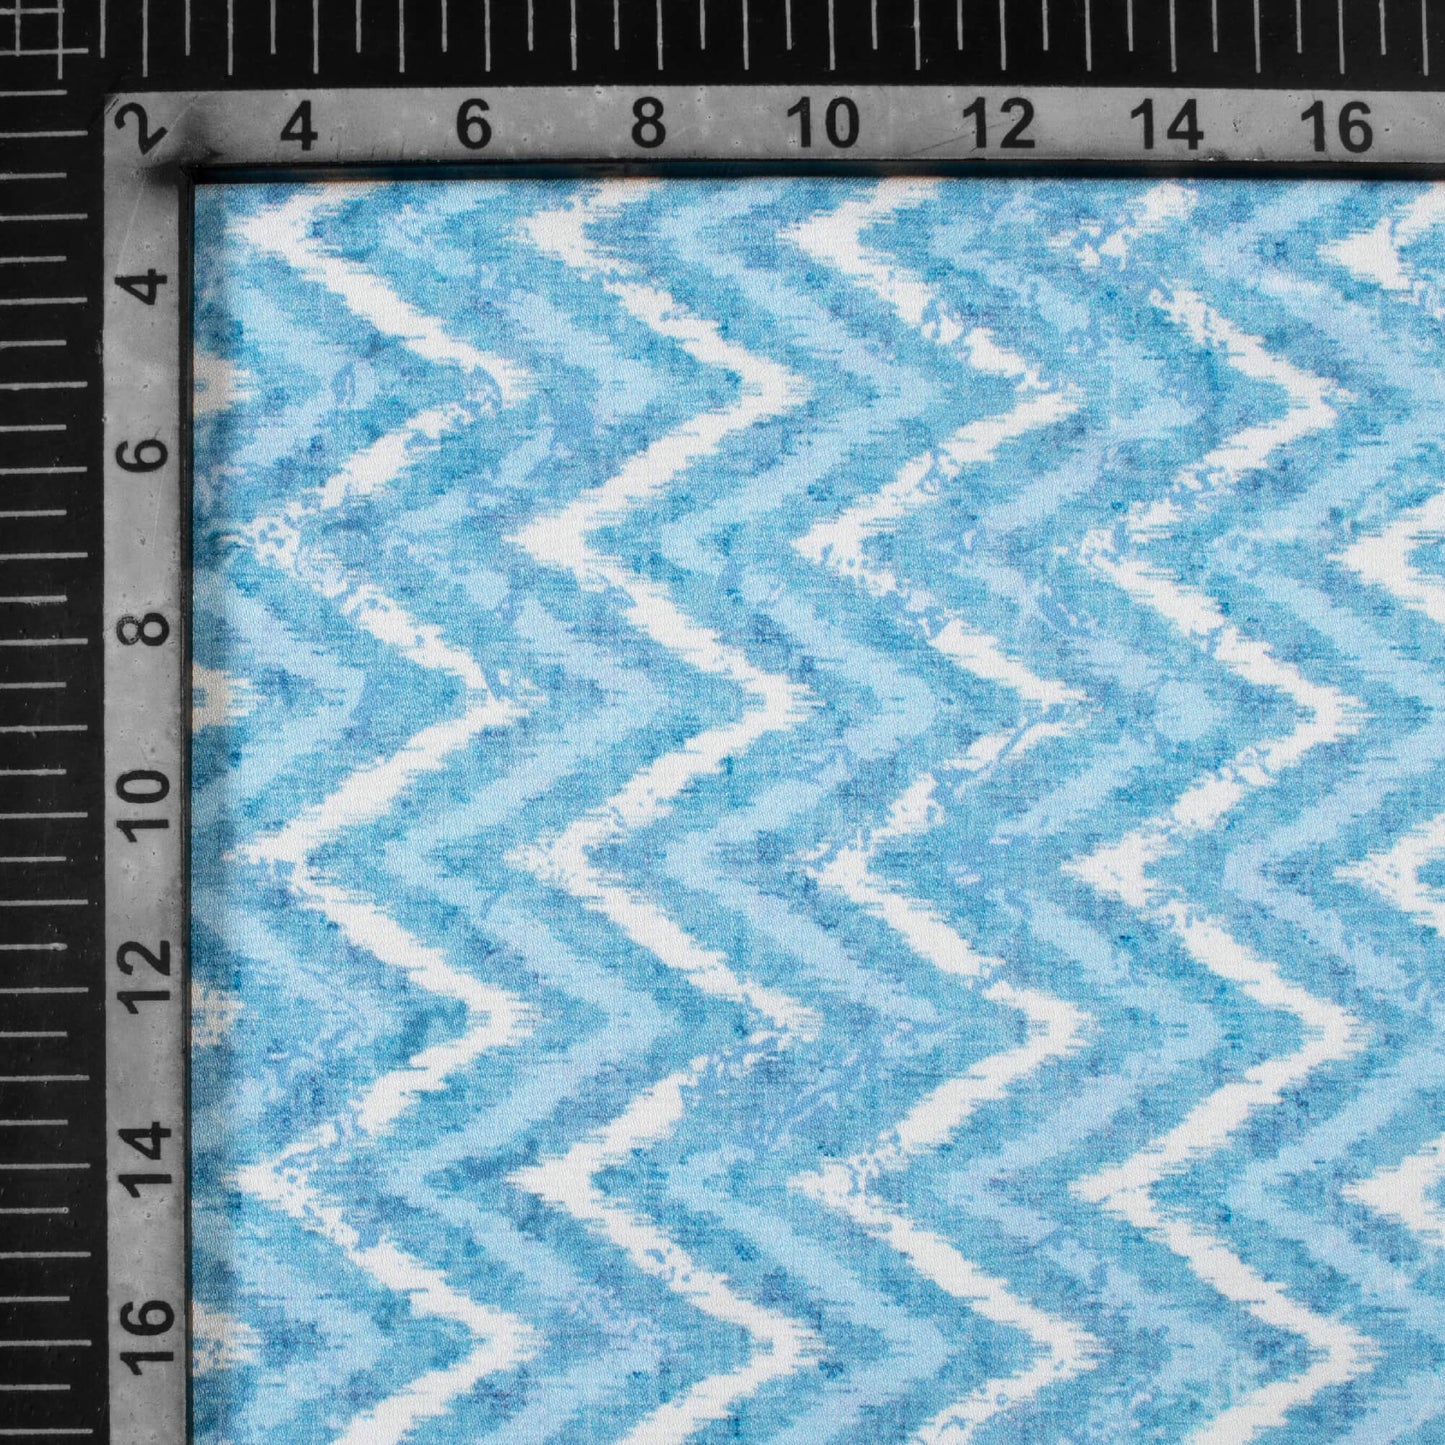 Steel Blue And White Chevron Pattern Digital Print Japan Satin Fabric